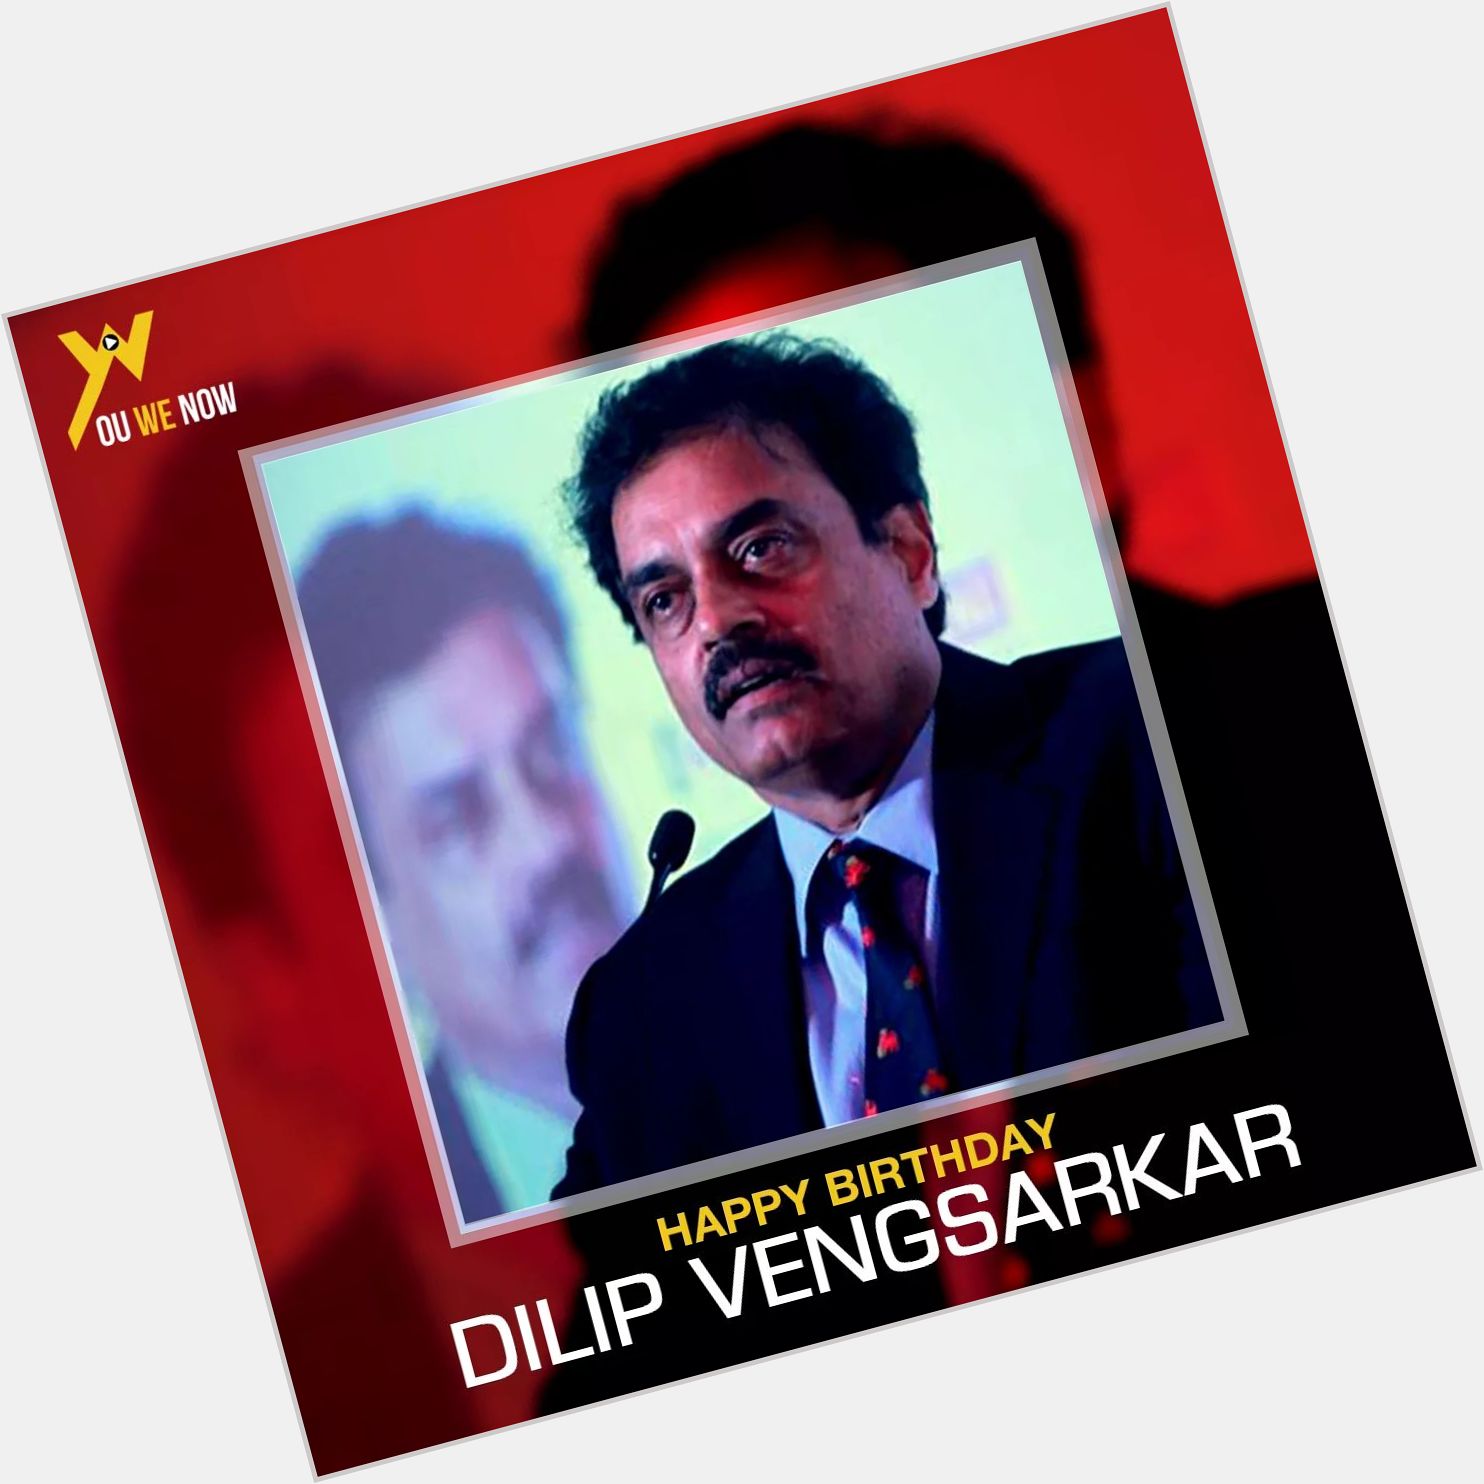 We wish you a very happy birthday Dilip Vengsarkar. 